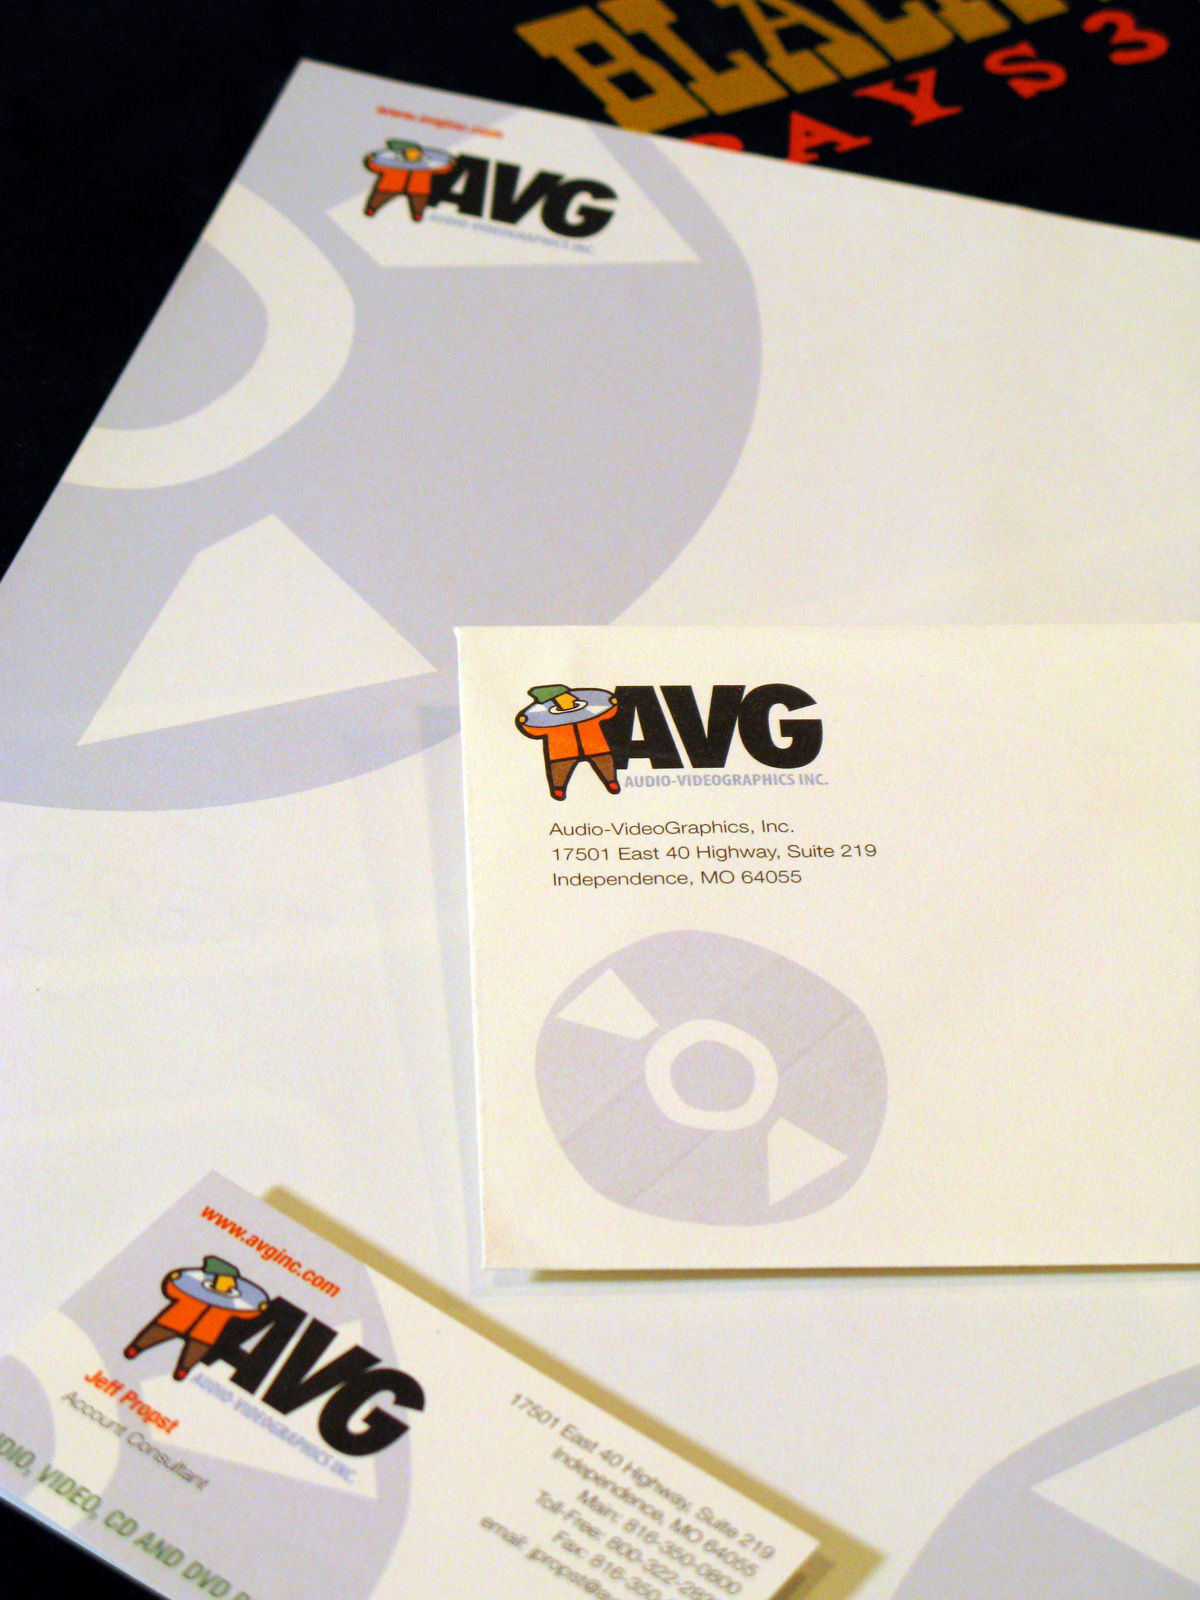 logo letterhed business card envelope Business Stationary